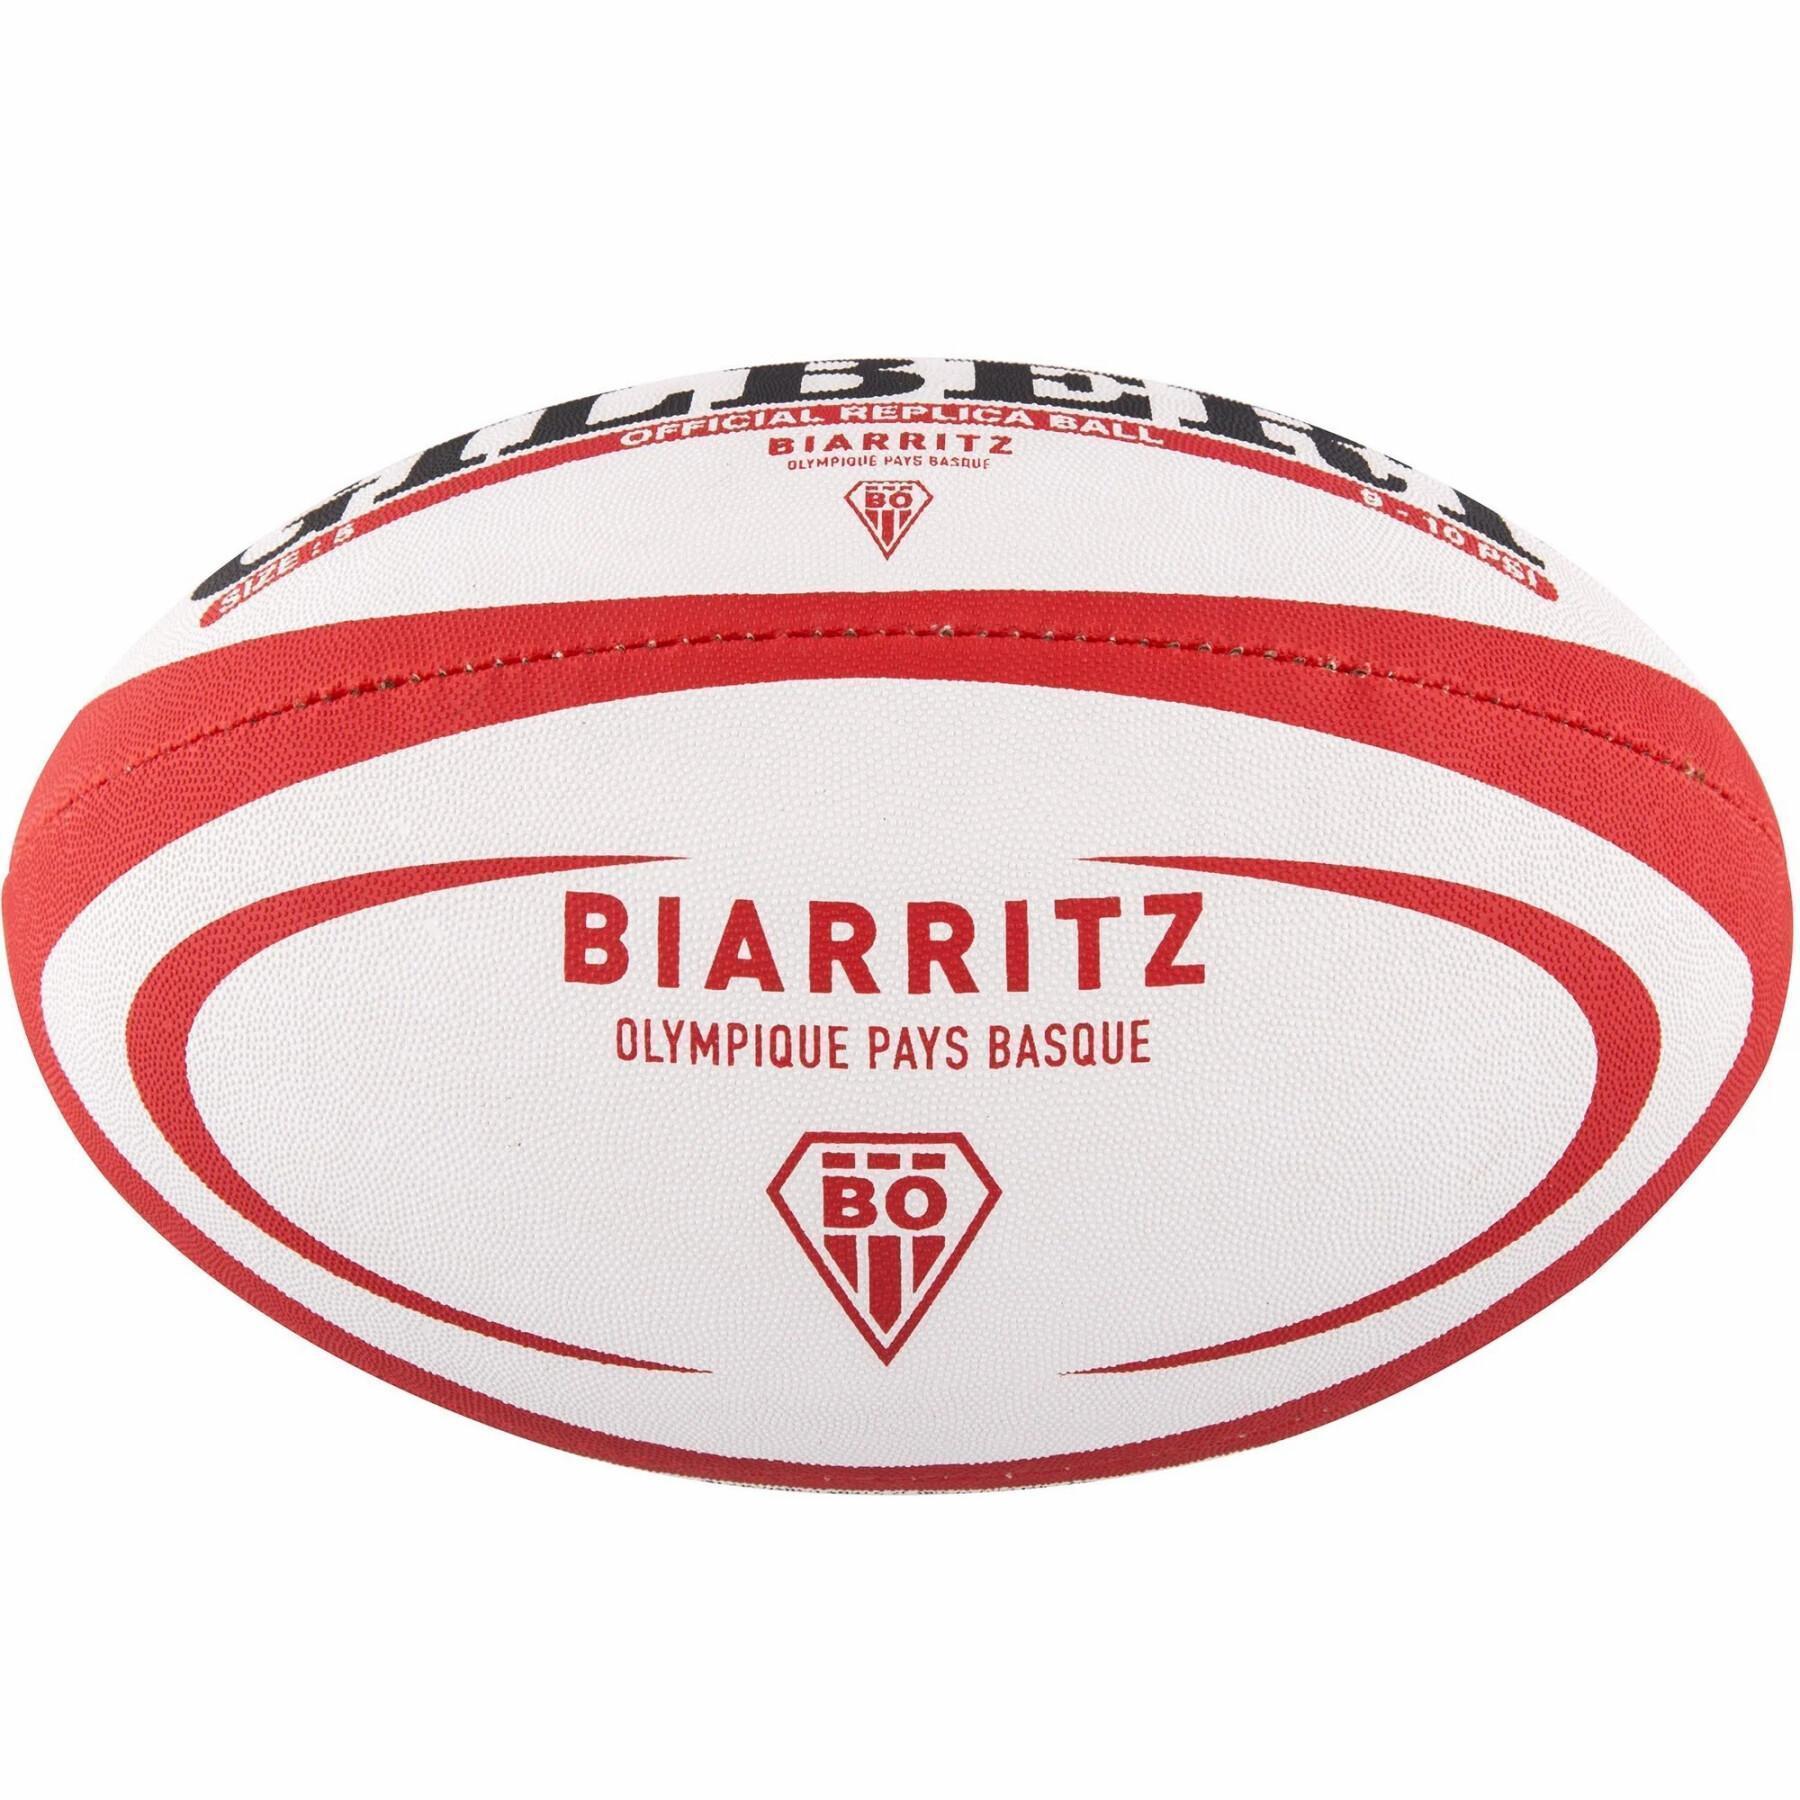 Rugbyball Biarritz